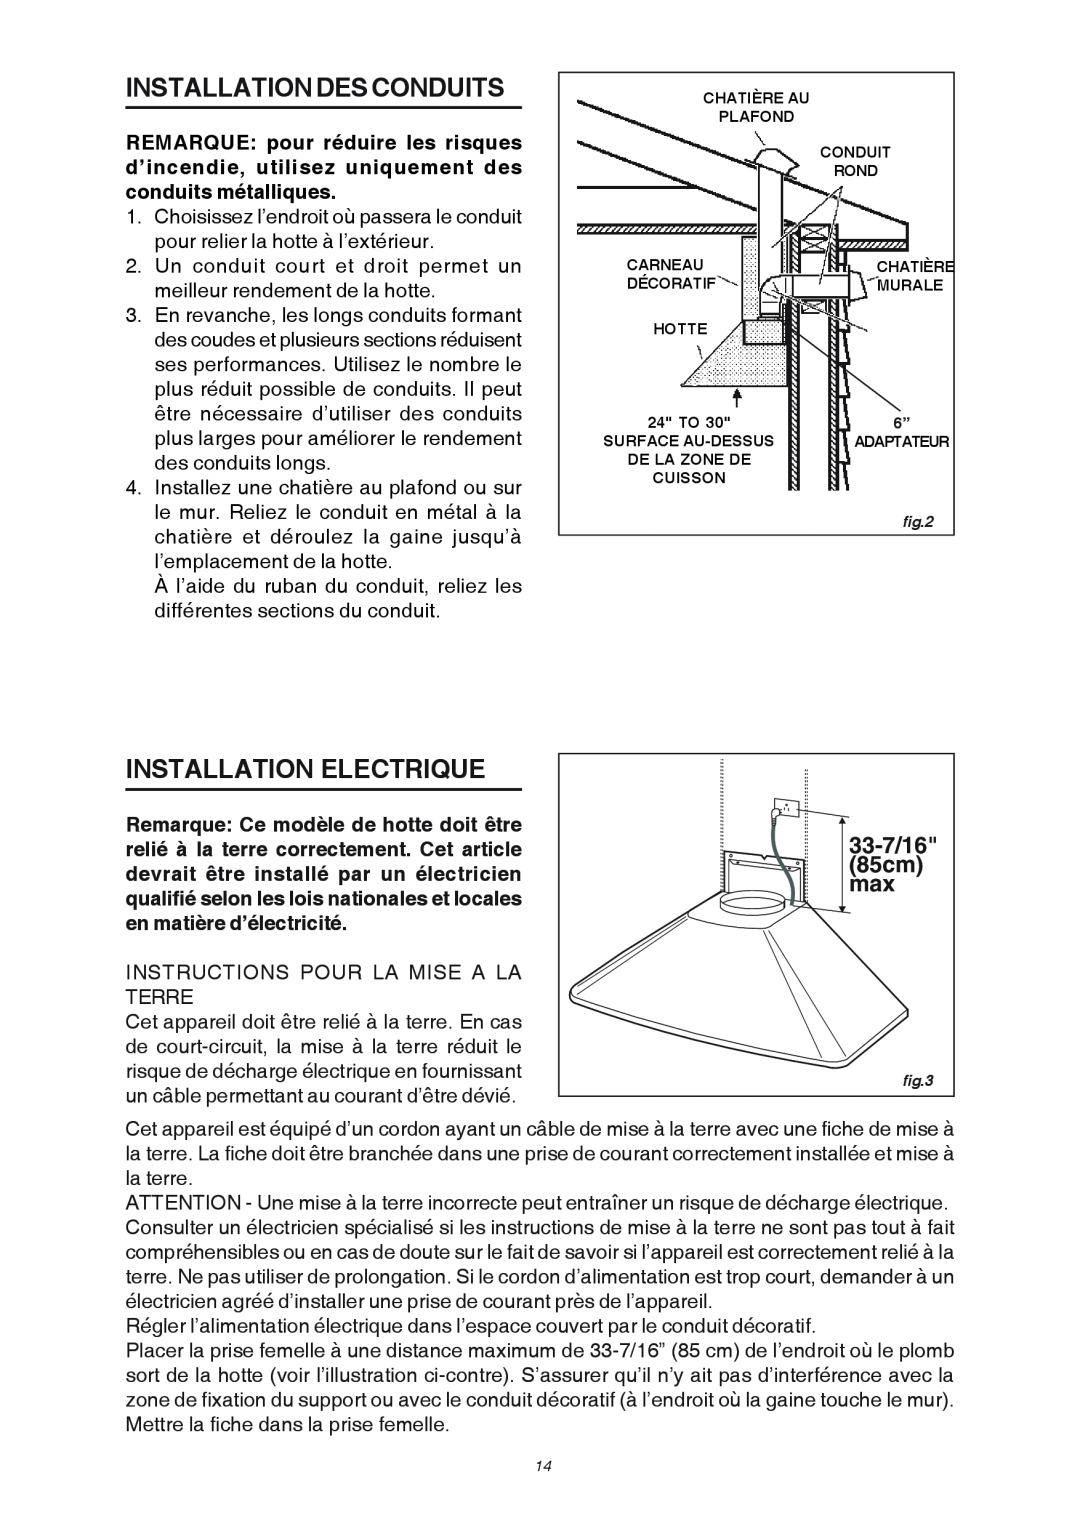 Broan RME50000 manual Installation Des Conduits, Installation Electrique, 85cm, 33-7/16 